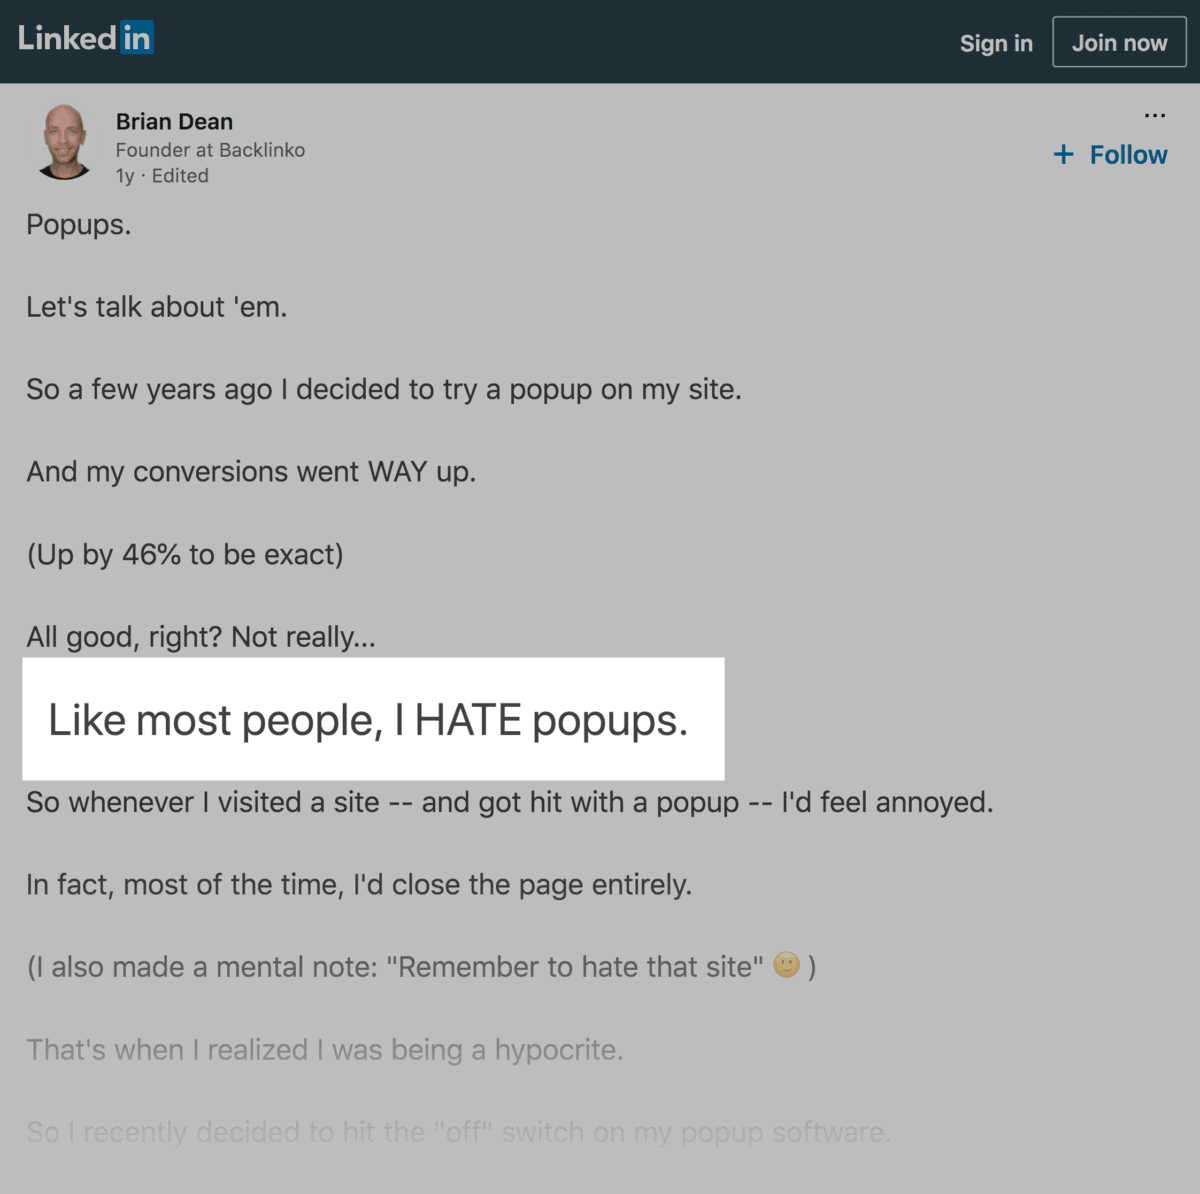 LinkedIn – Popups comment